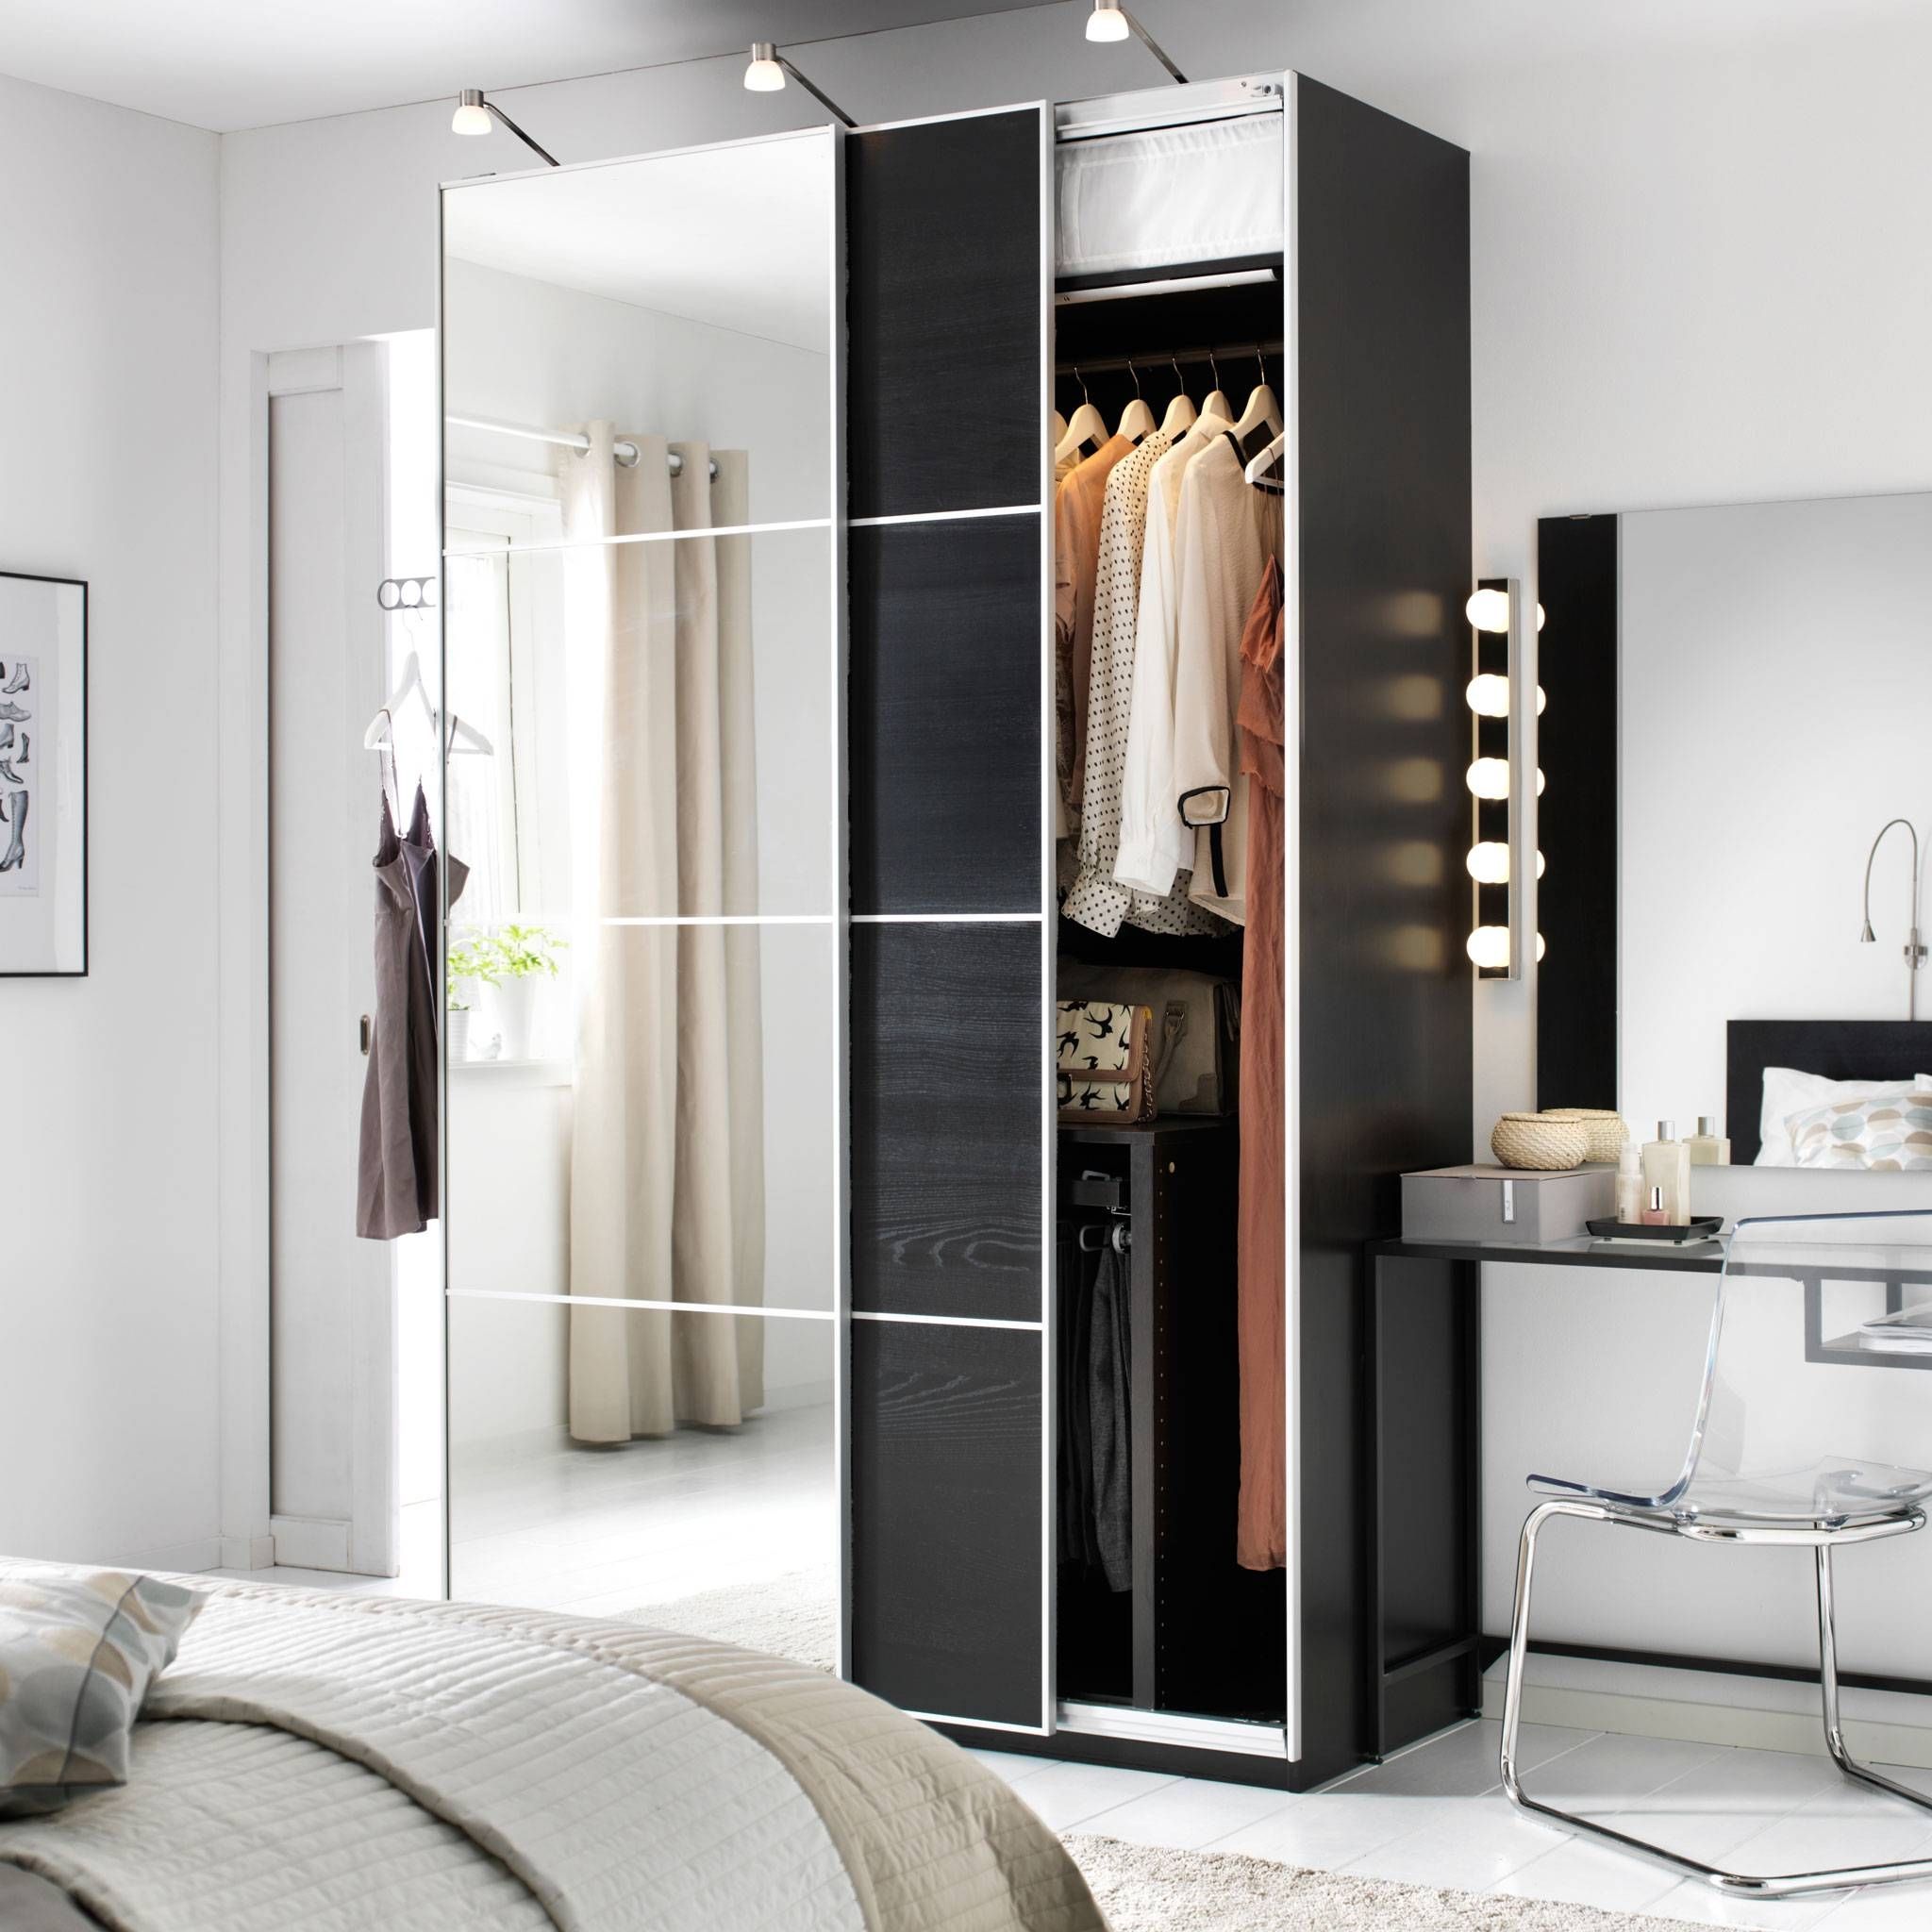 Bedroom Furniture & Ideas | Ikea In Dark Wardrobes (View 13 of 30)